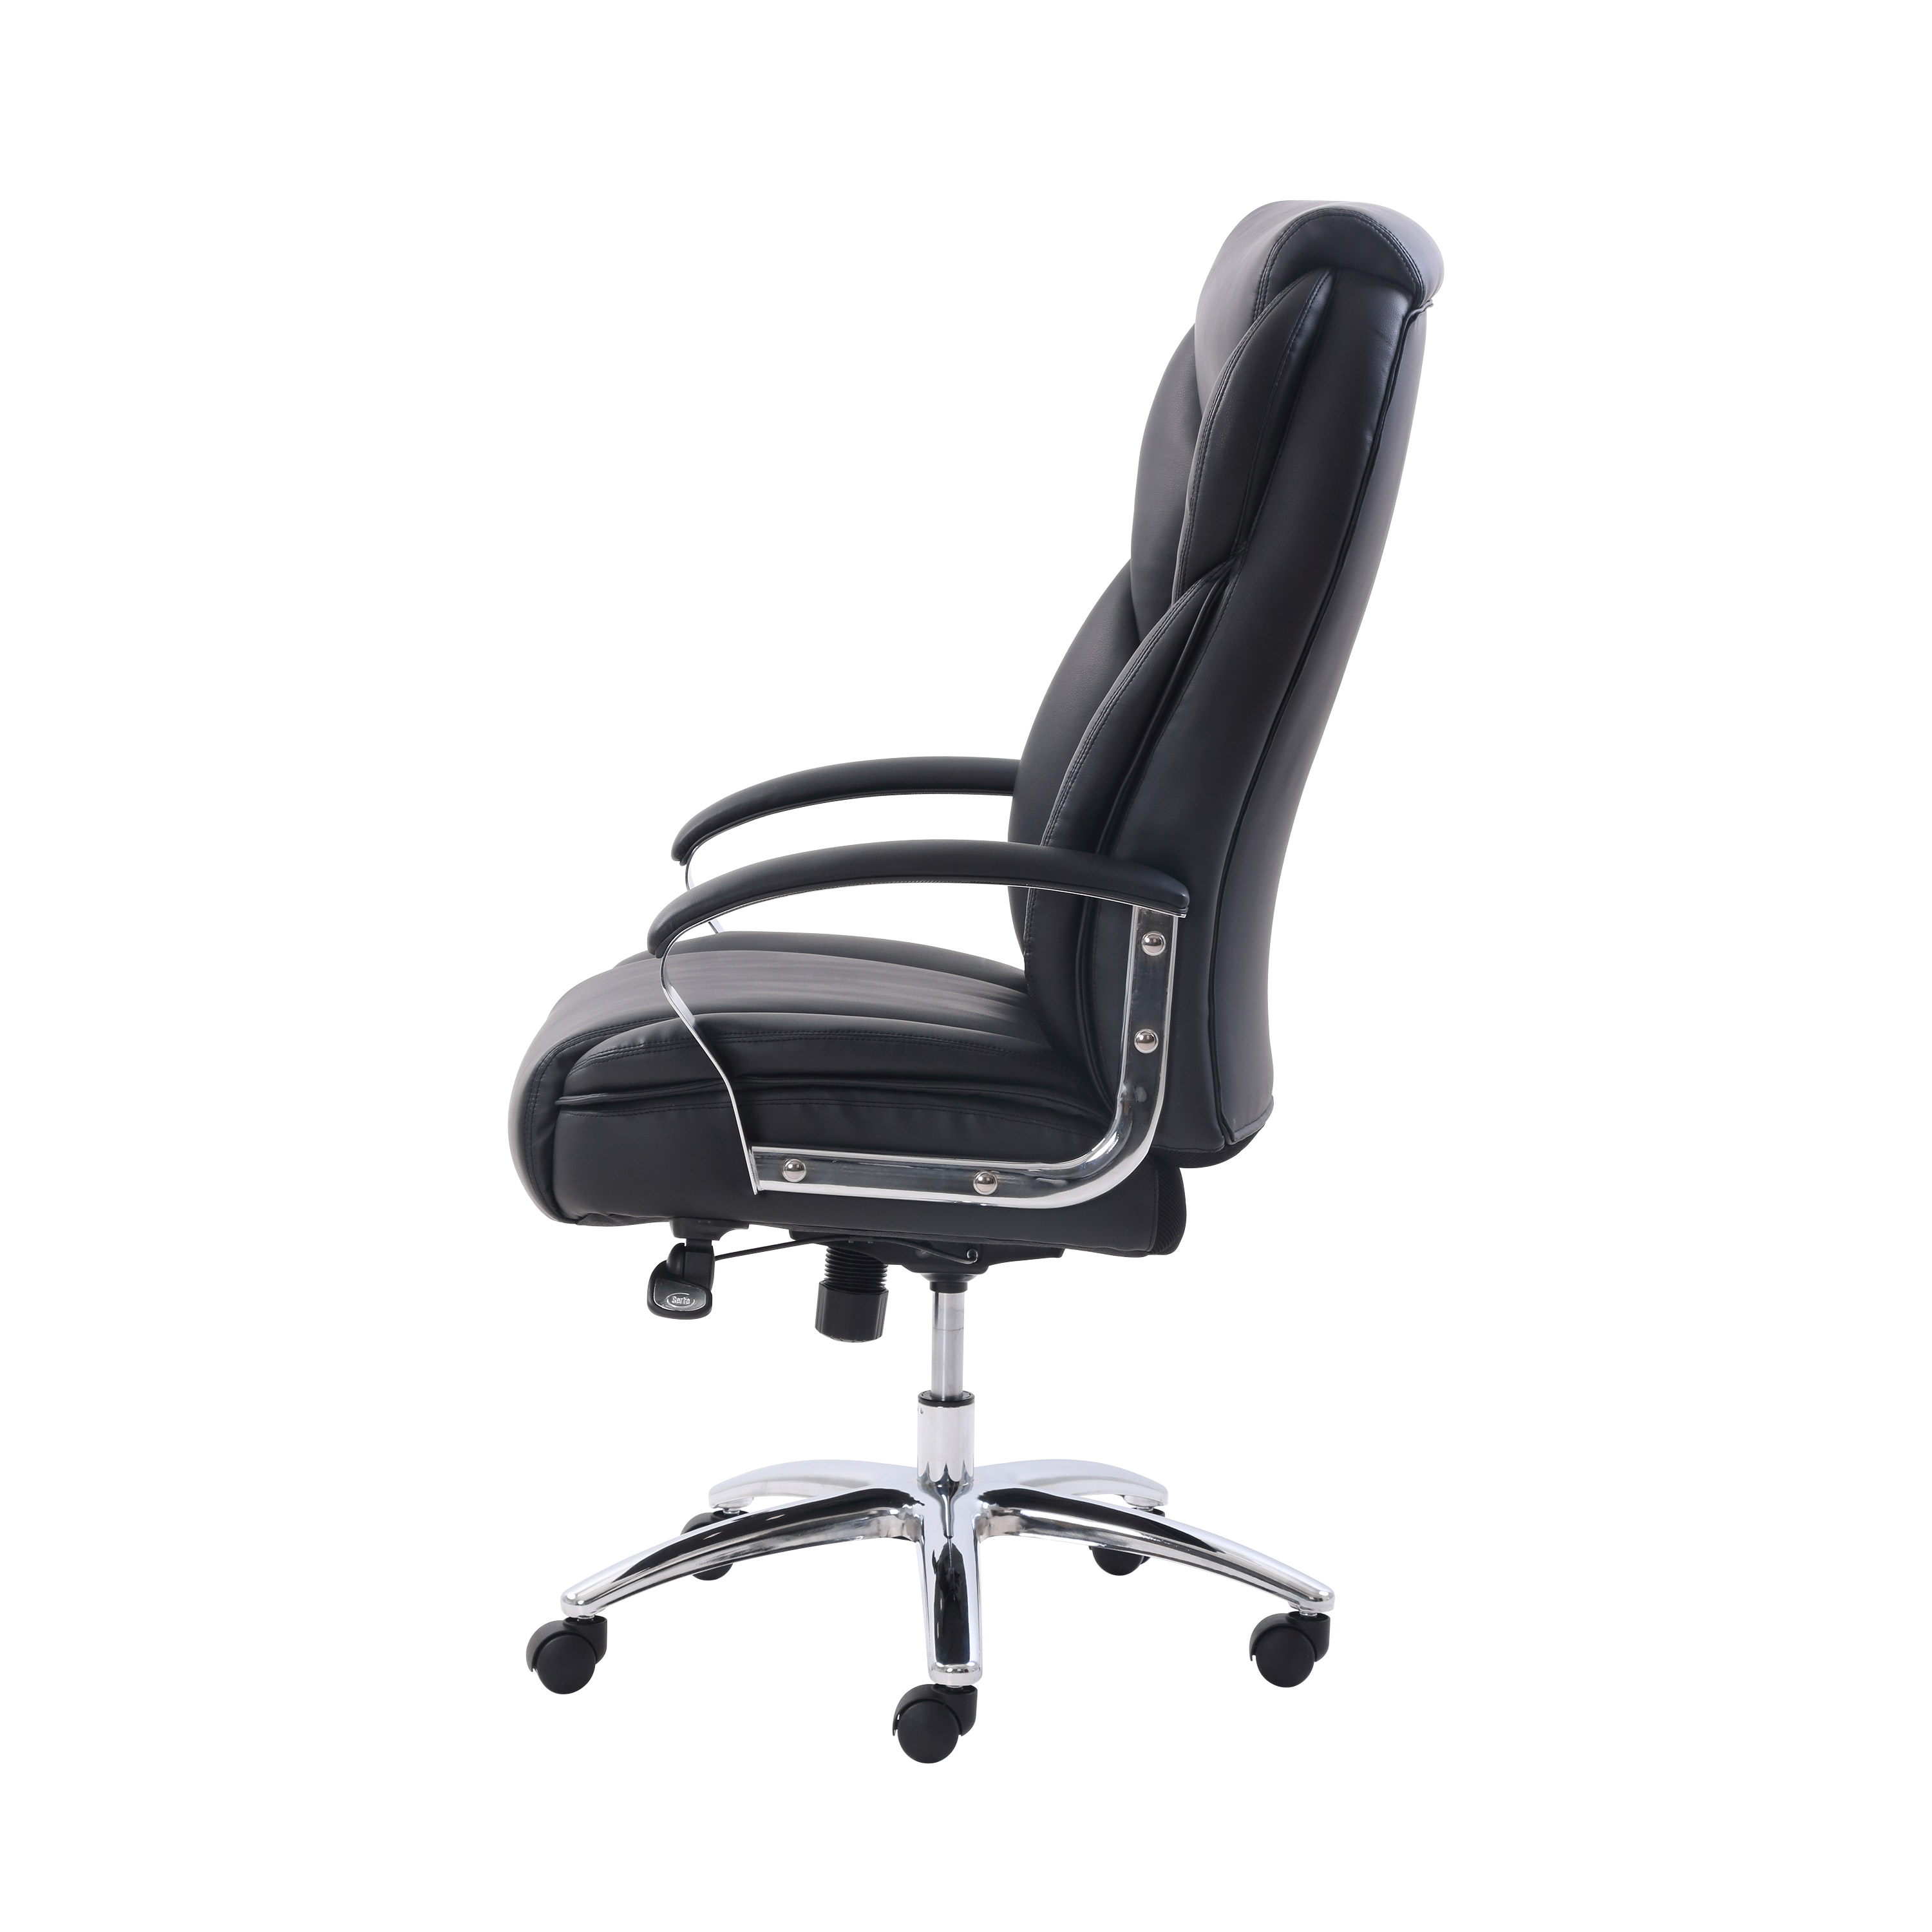 Buy Serta Big Tall Office Chair With Memory Foam